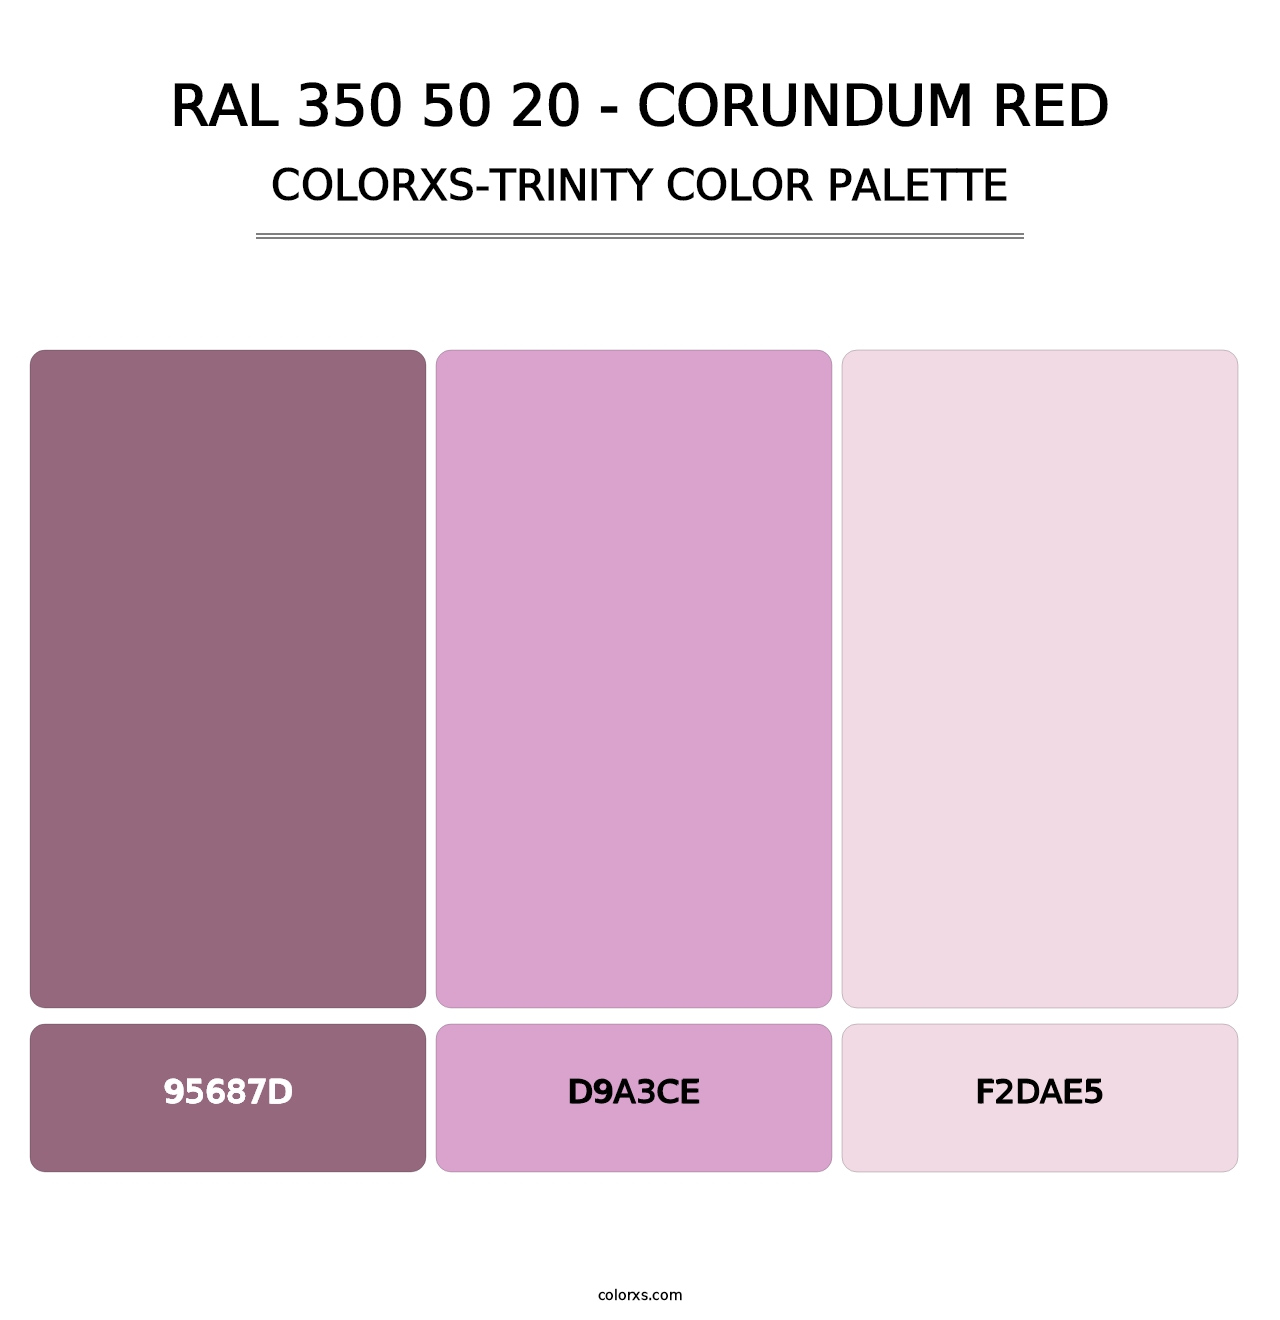 RAL 350 50 20 - Corundum Red - Colorxs Trinity Palette